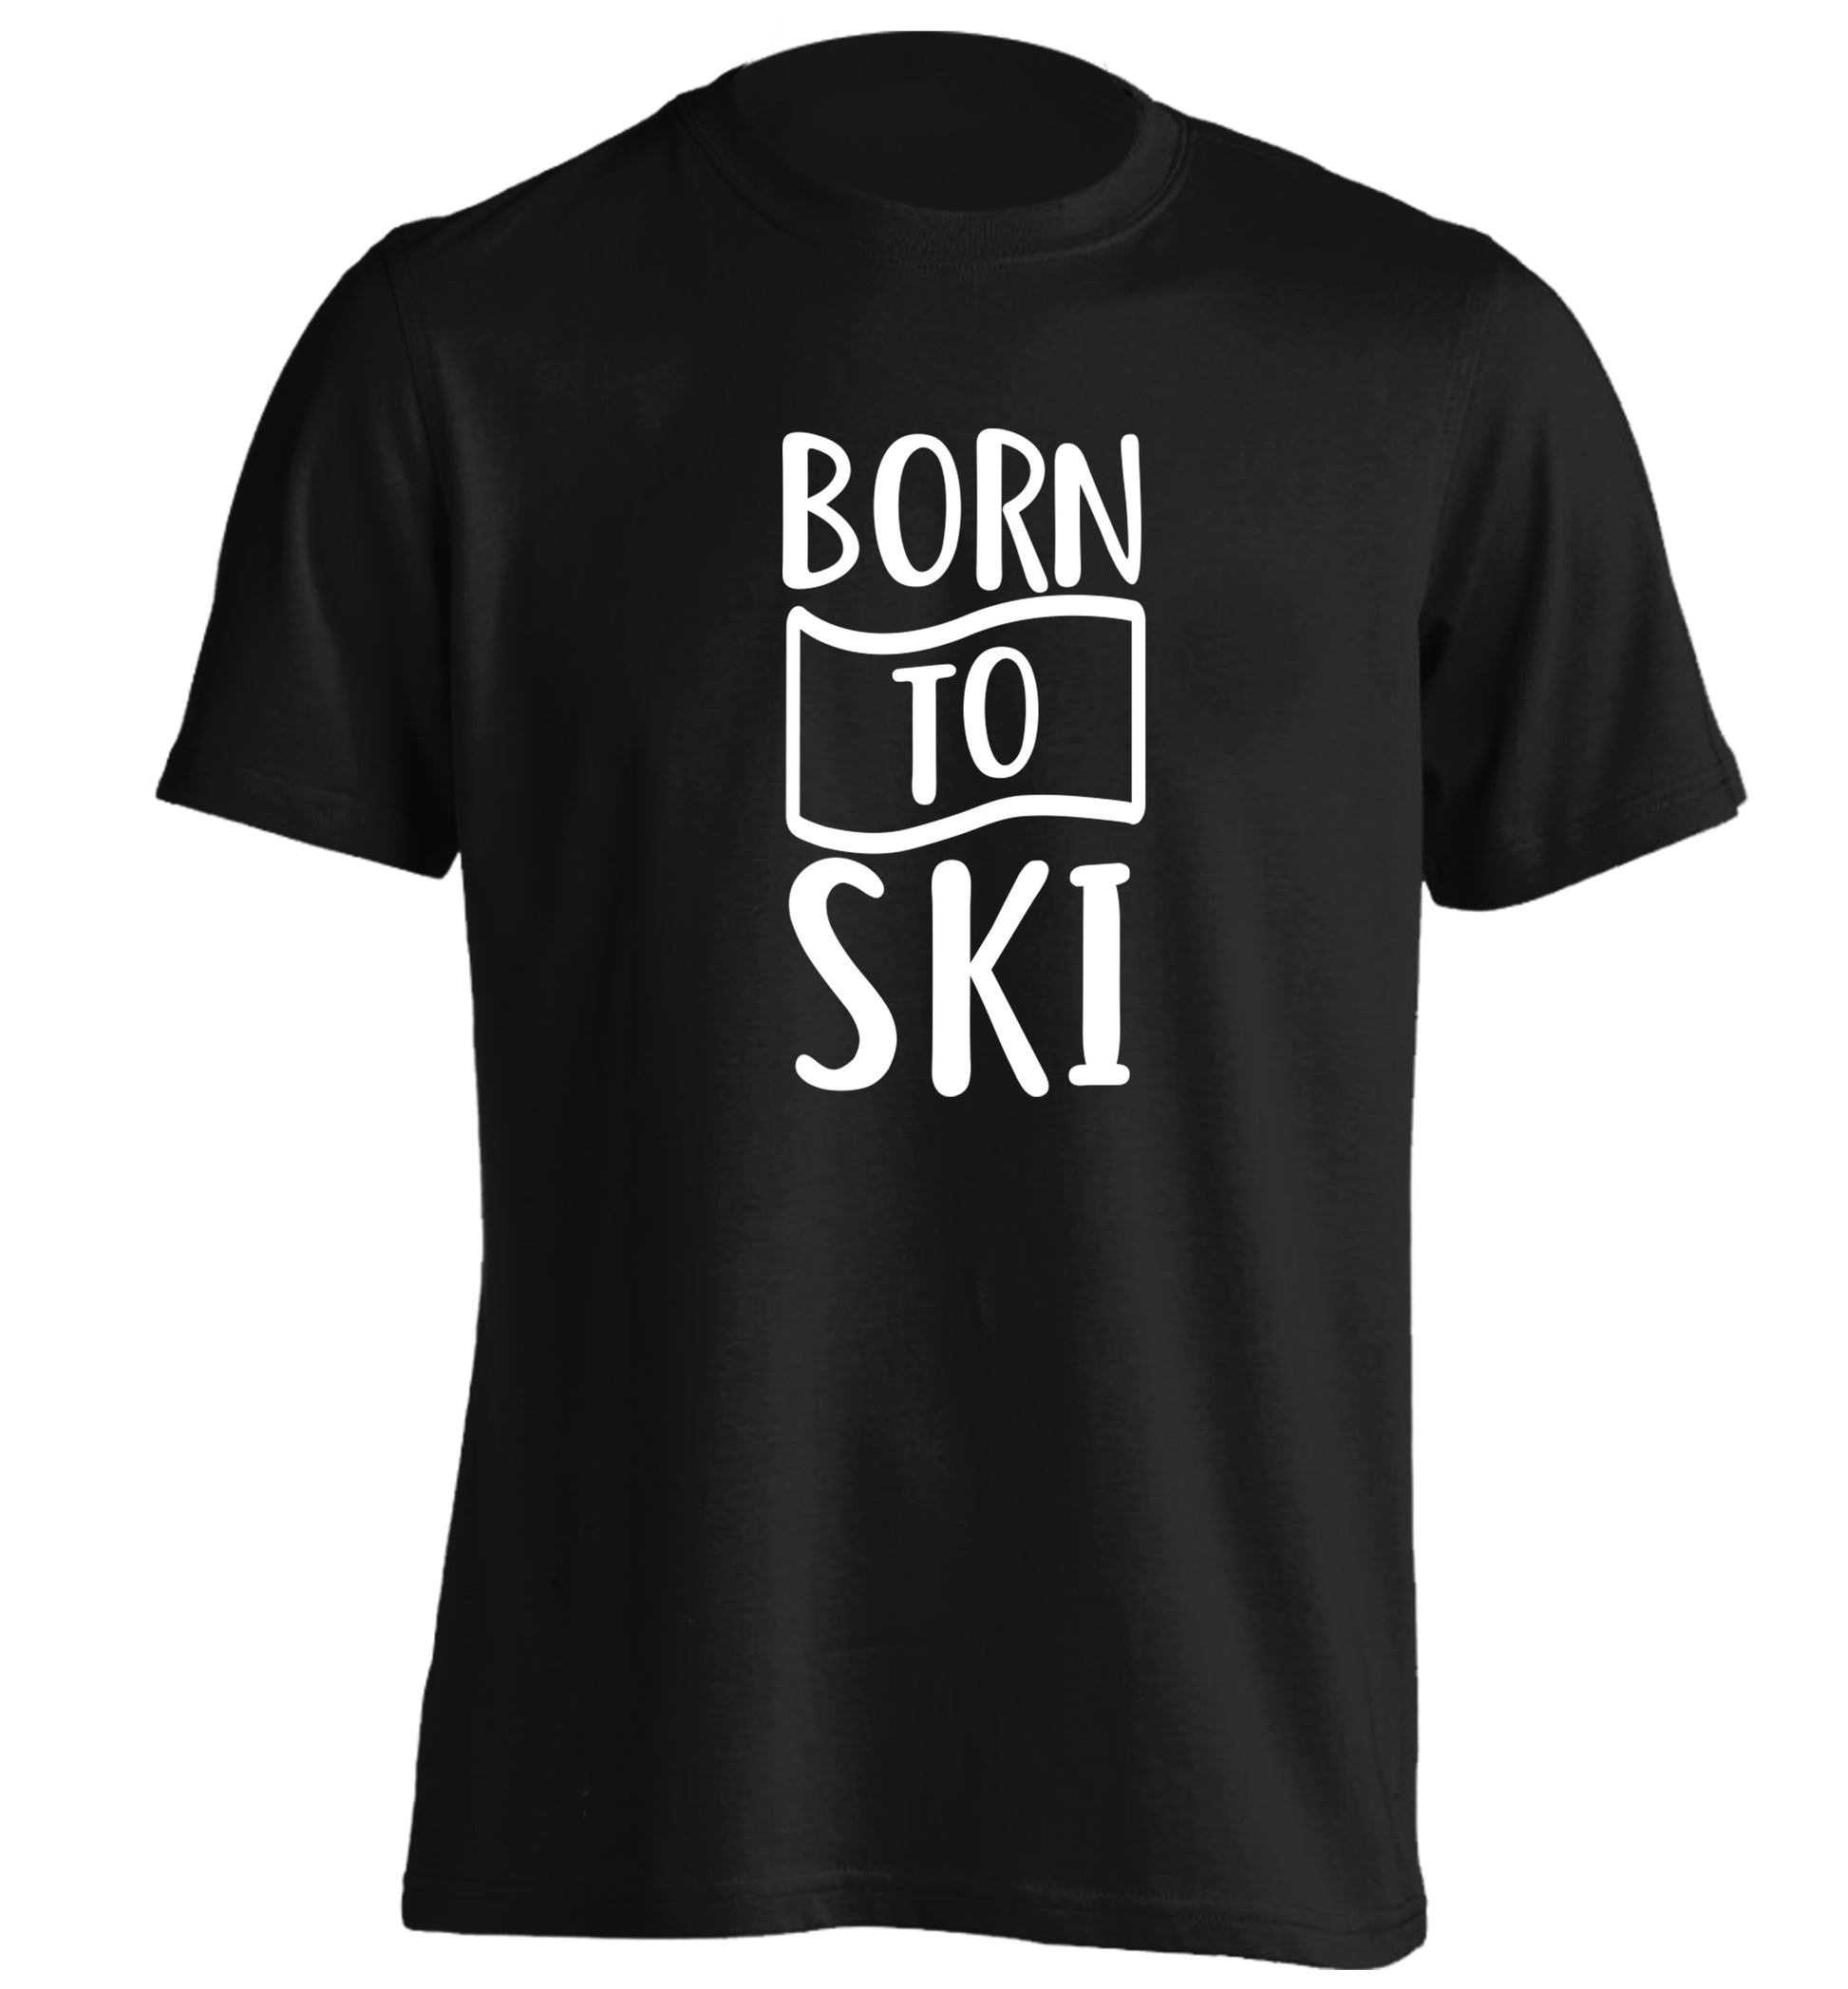 Born to ski adults unisexblack Tshirt 2XL